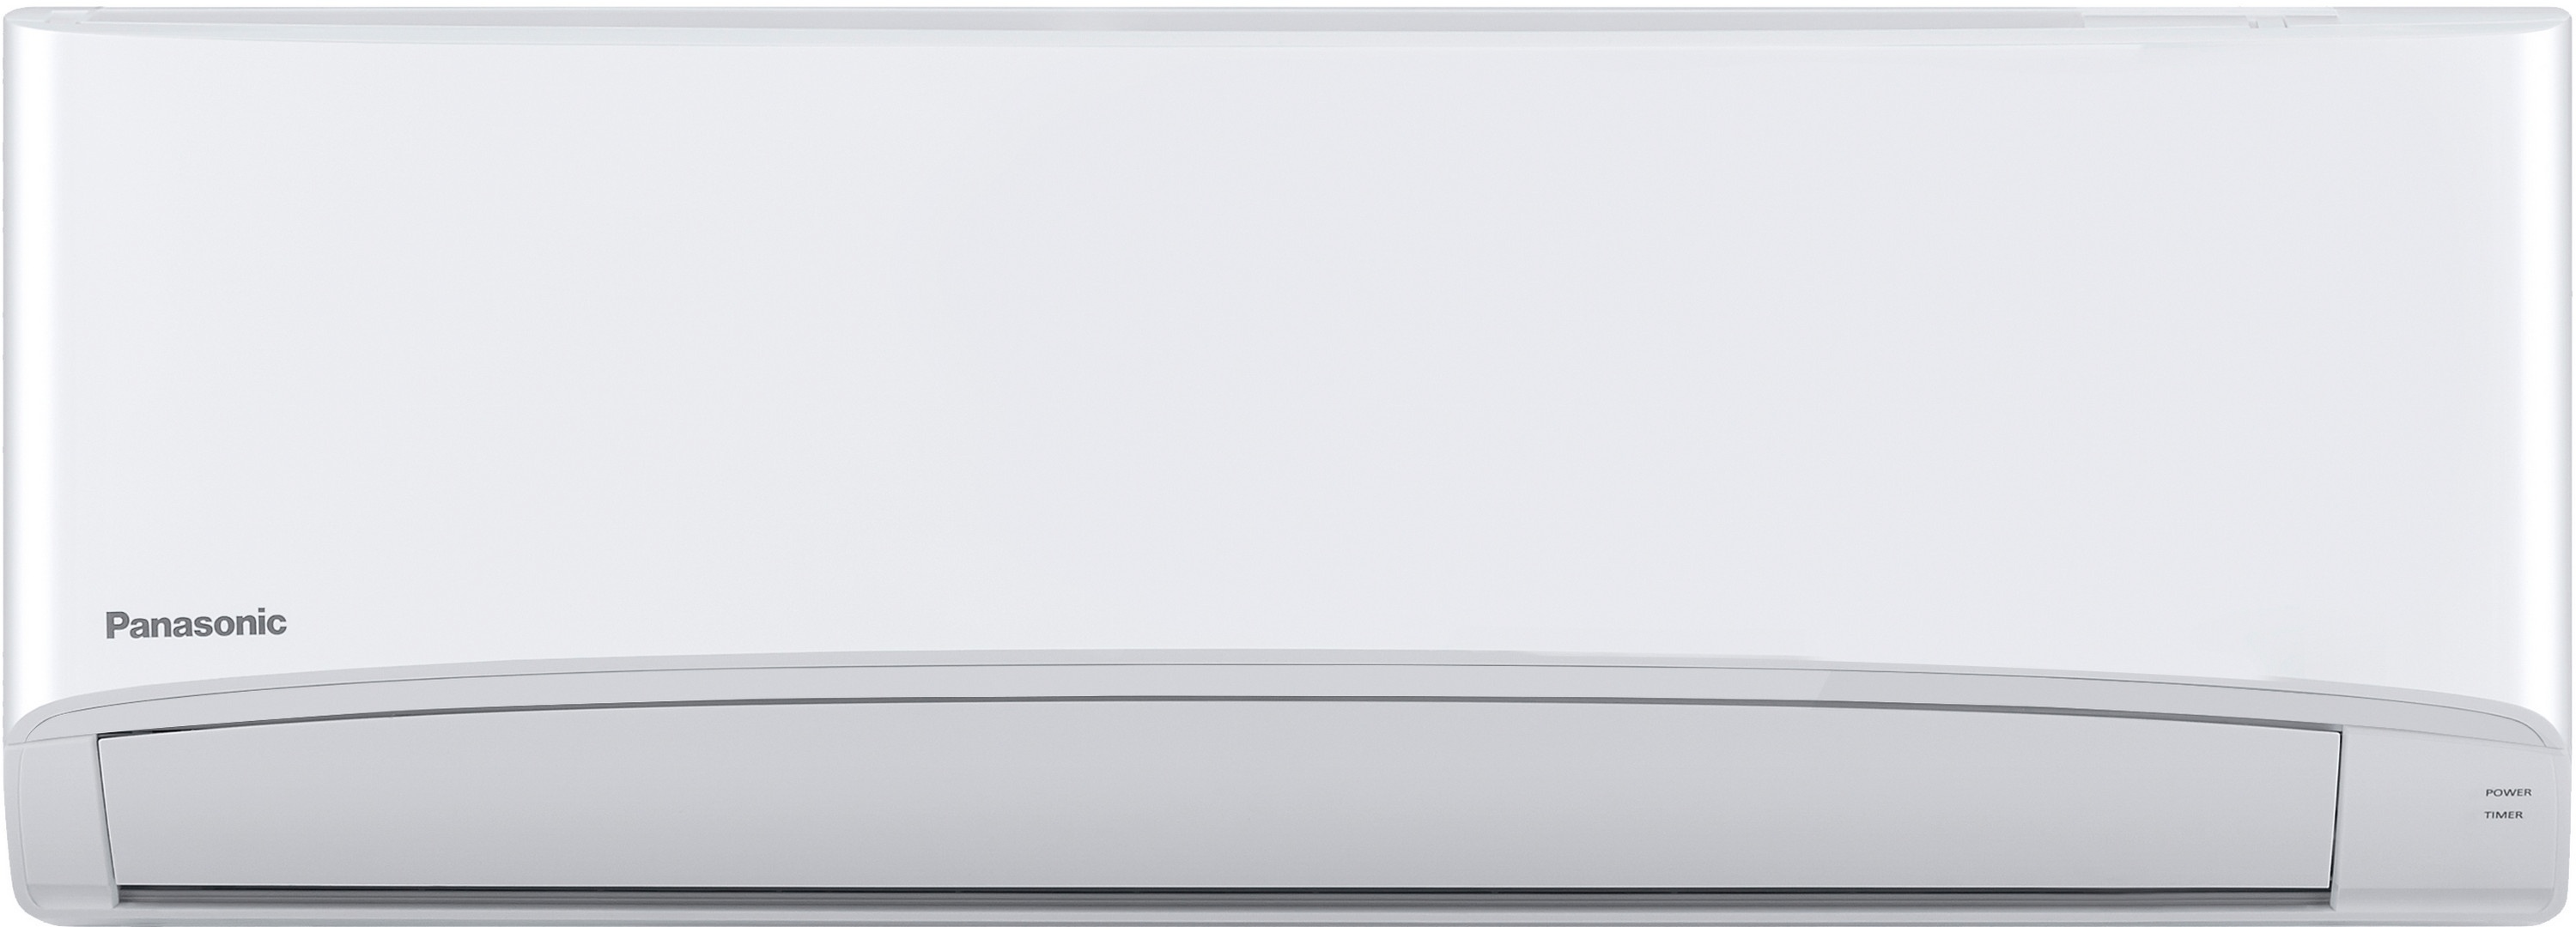 Кондиционер сплит-система Panasonic Compact Inverter CS/CU-TZ42TKEW цена 36999.00 грн - фотография 2